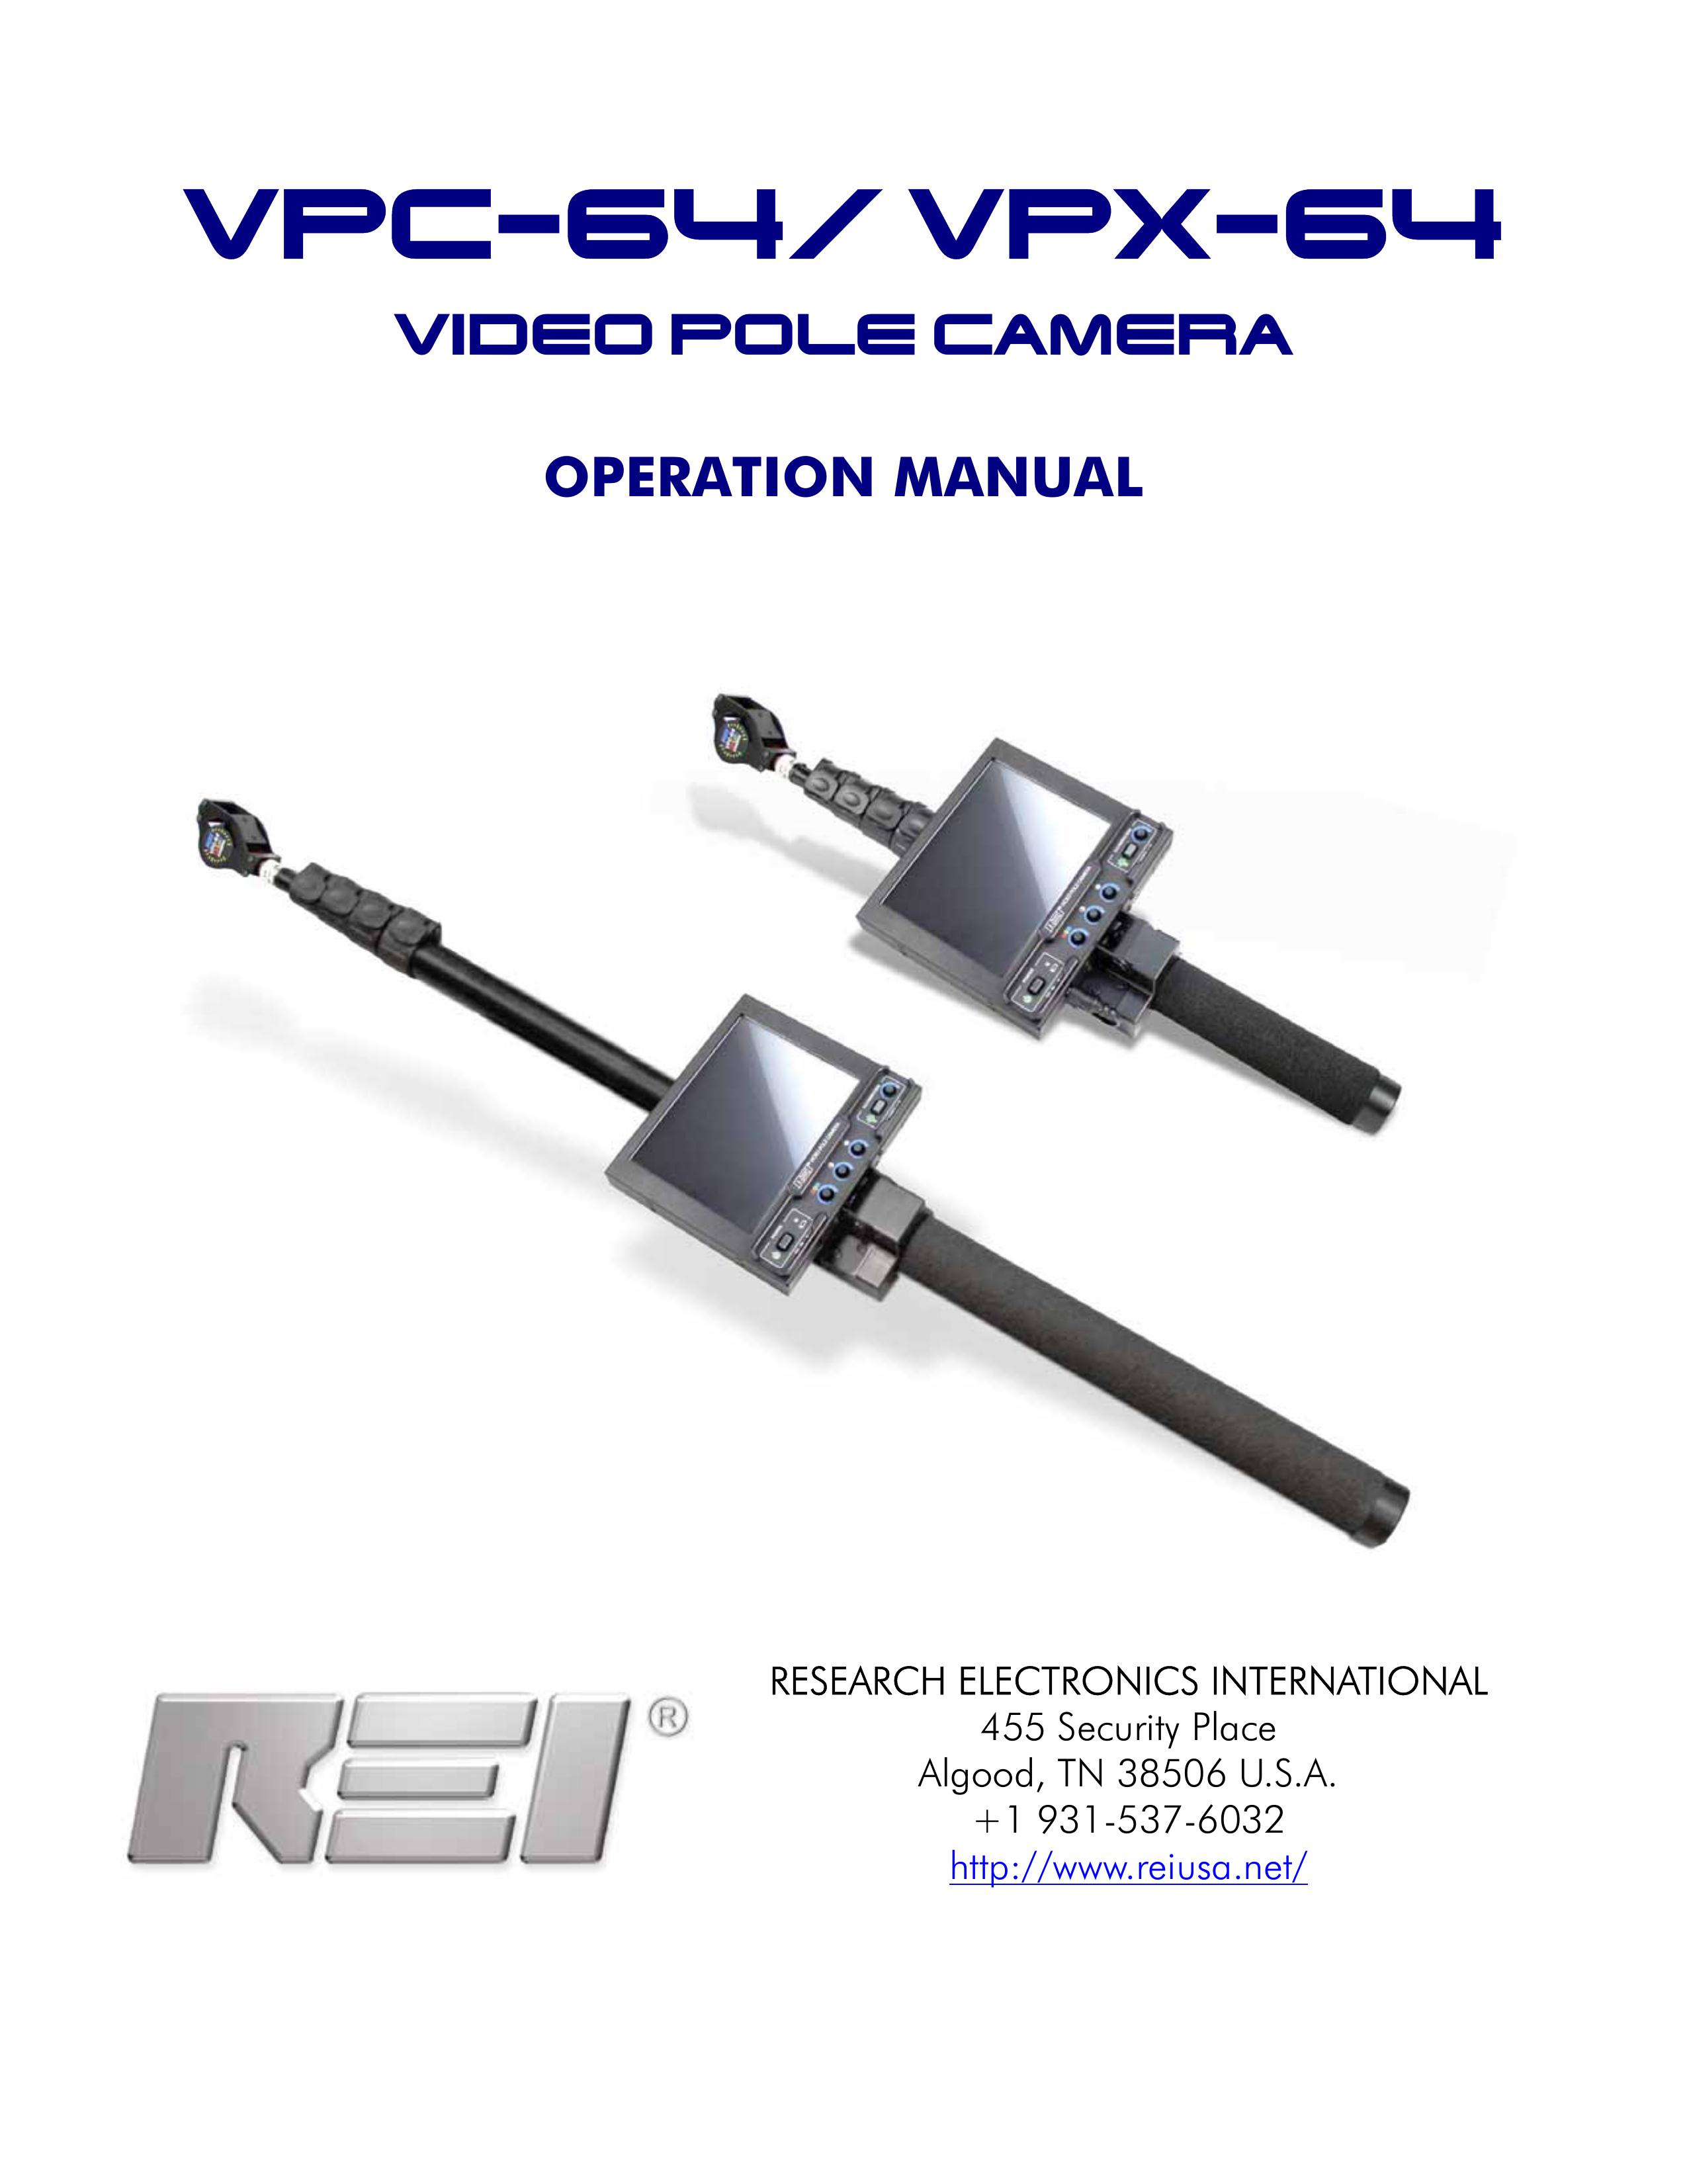 REI VPX-64 Digital Camera User Manual